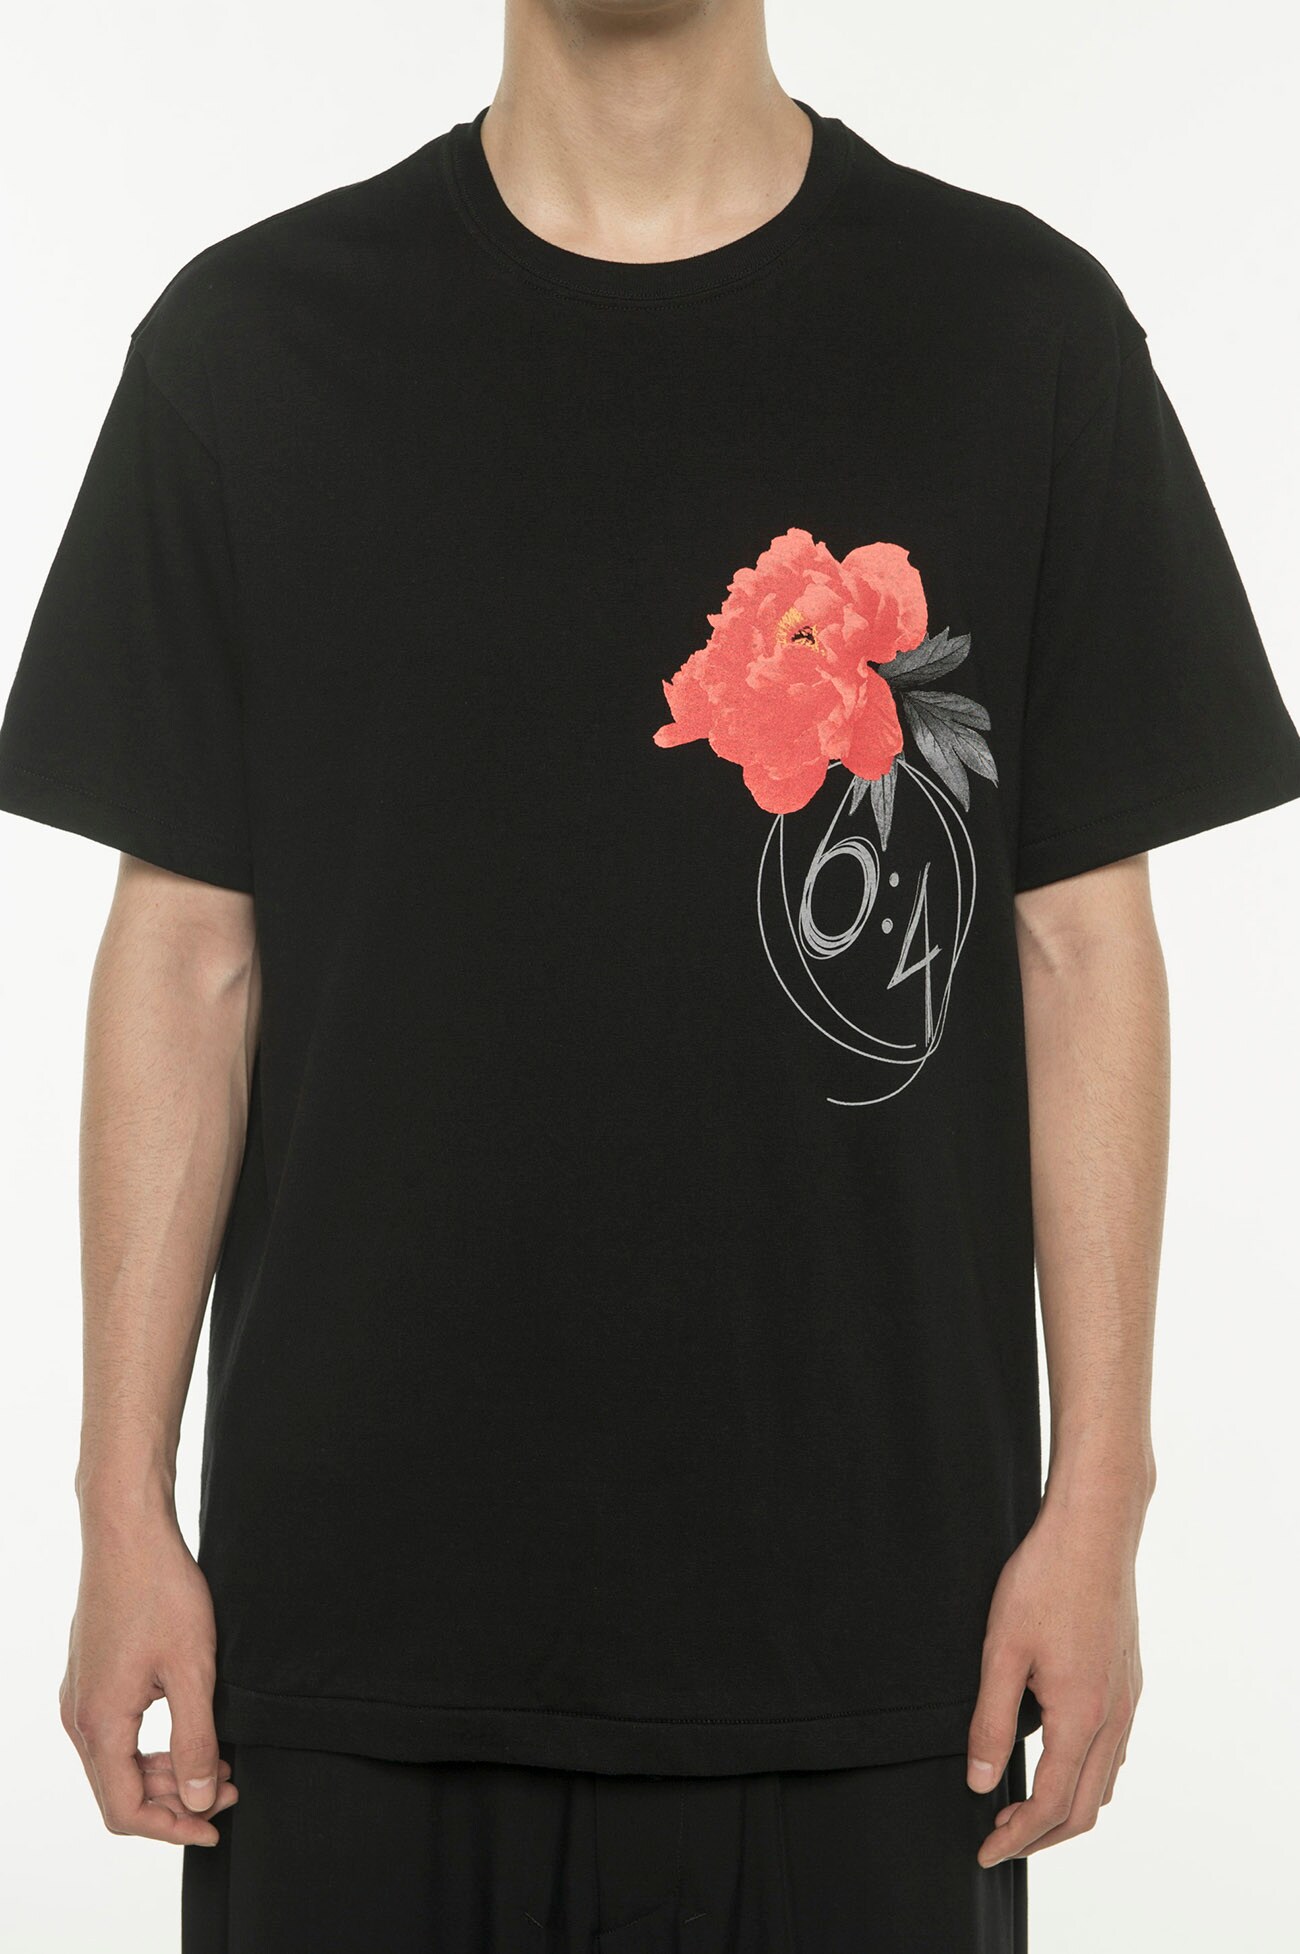 20/CottonJersey Red Peony Flower Ã6:4 T-Shirt